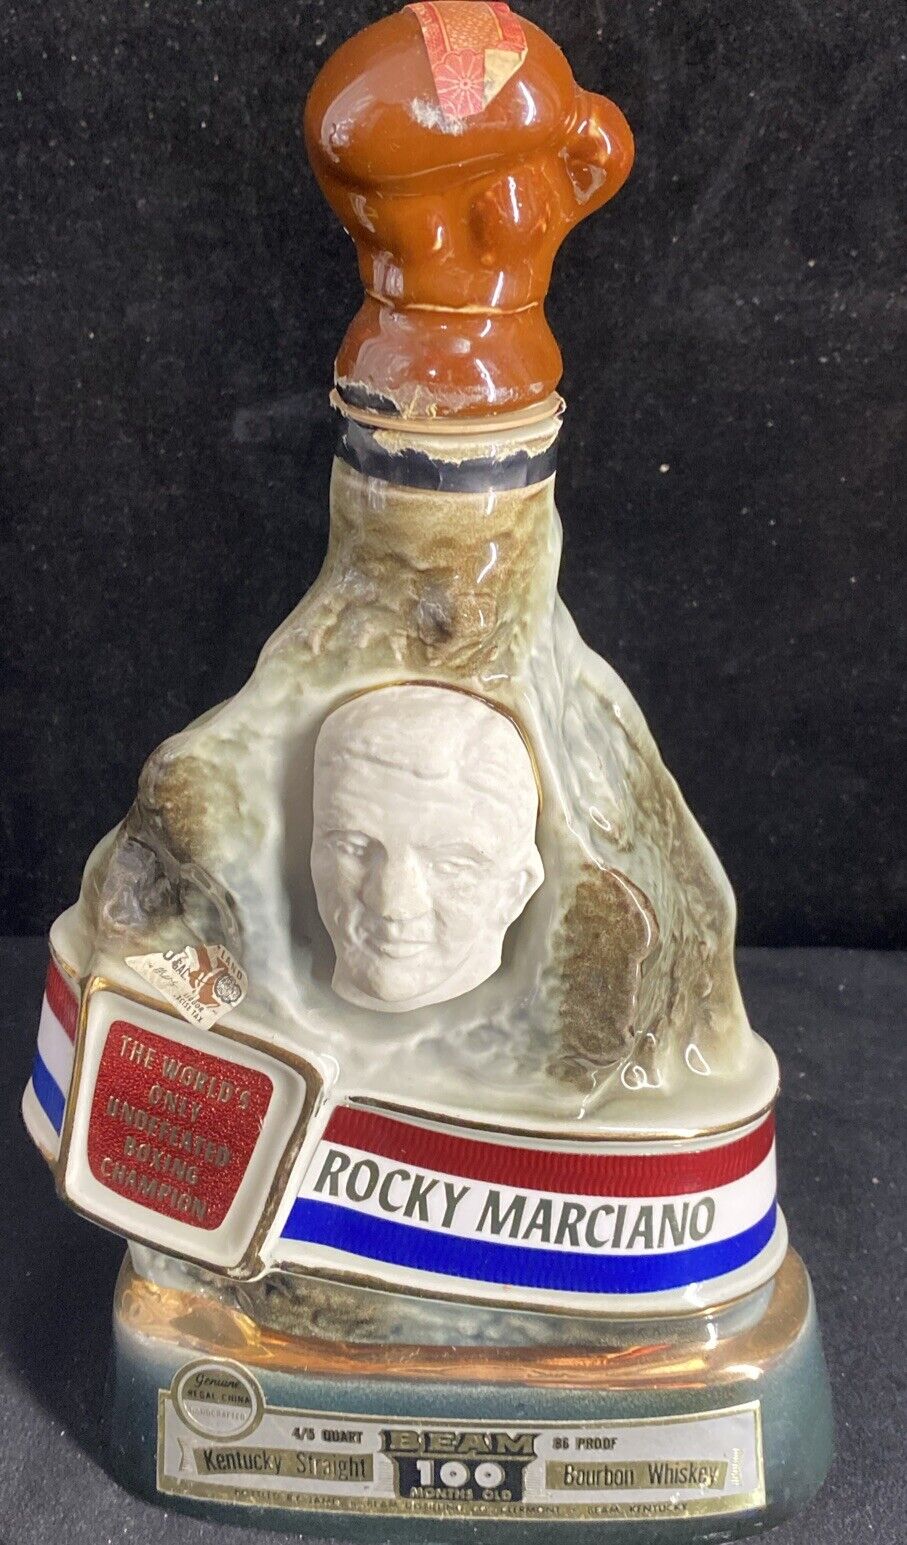 Rocky Marciano Jim Beam Vintage 1973 Decorative Bottle Empty